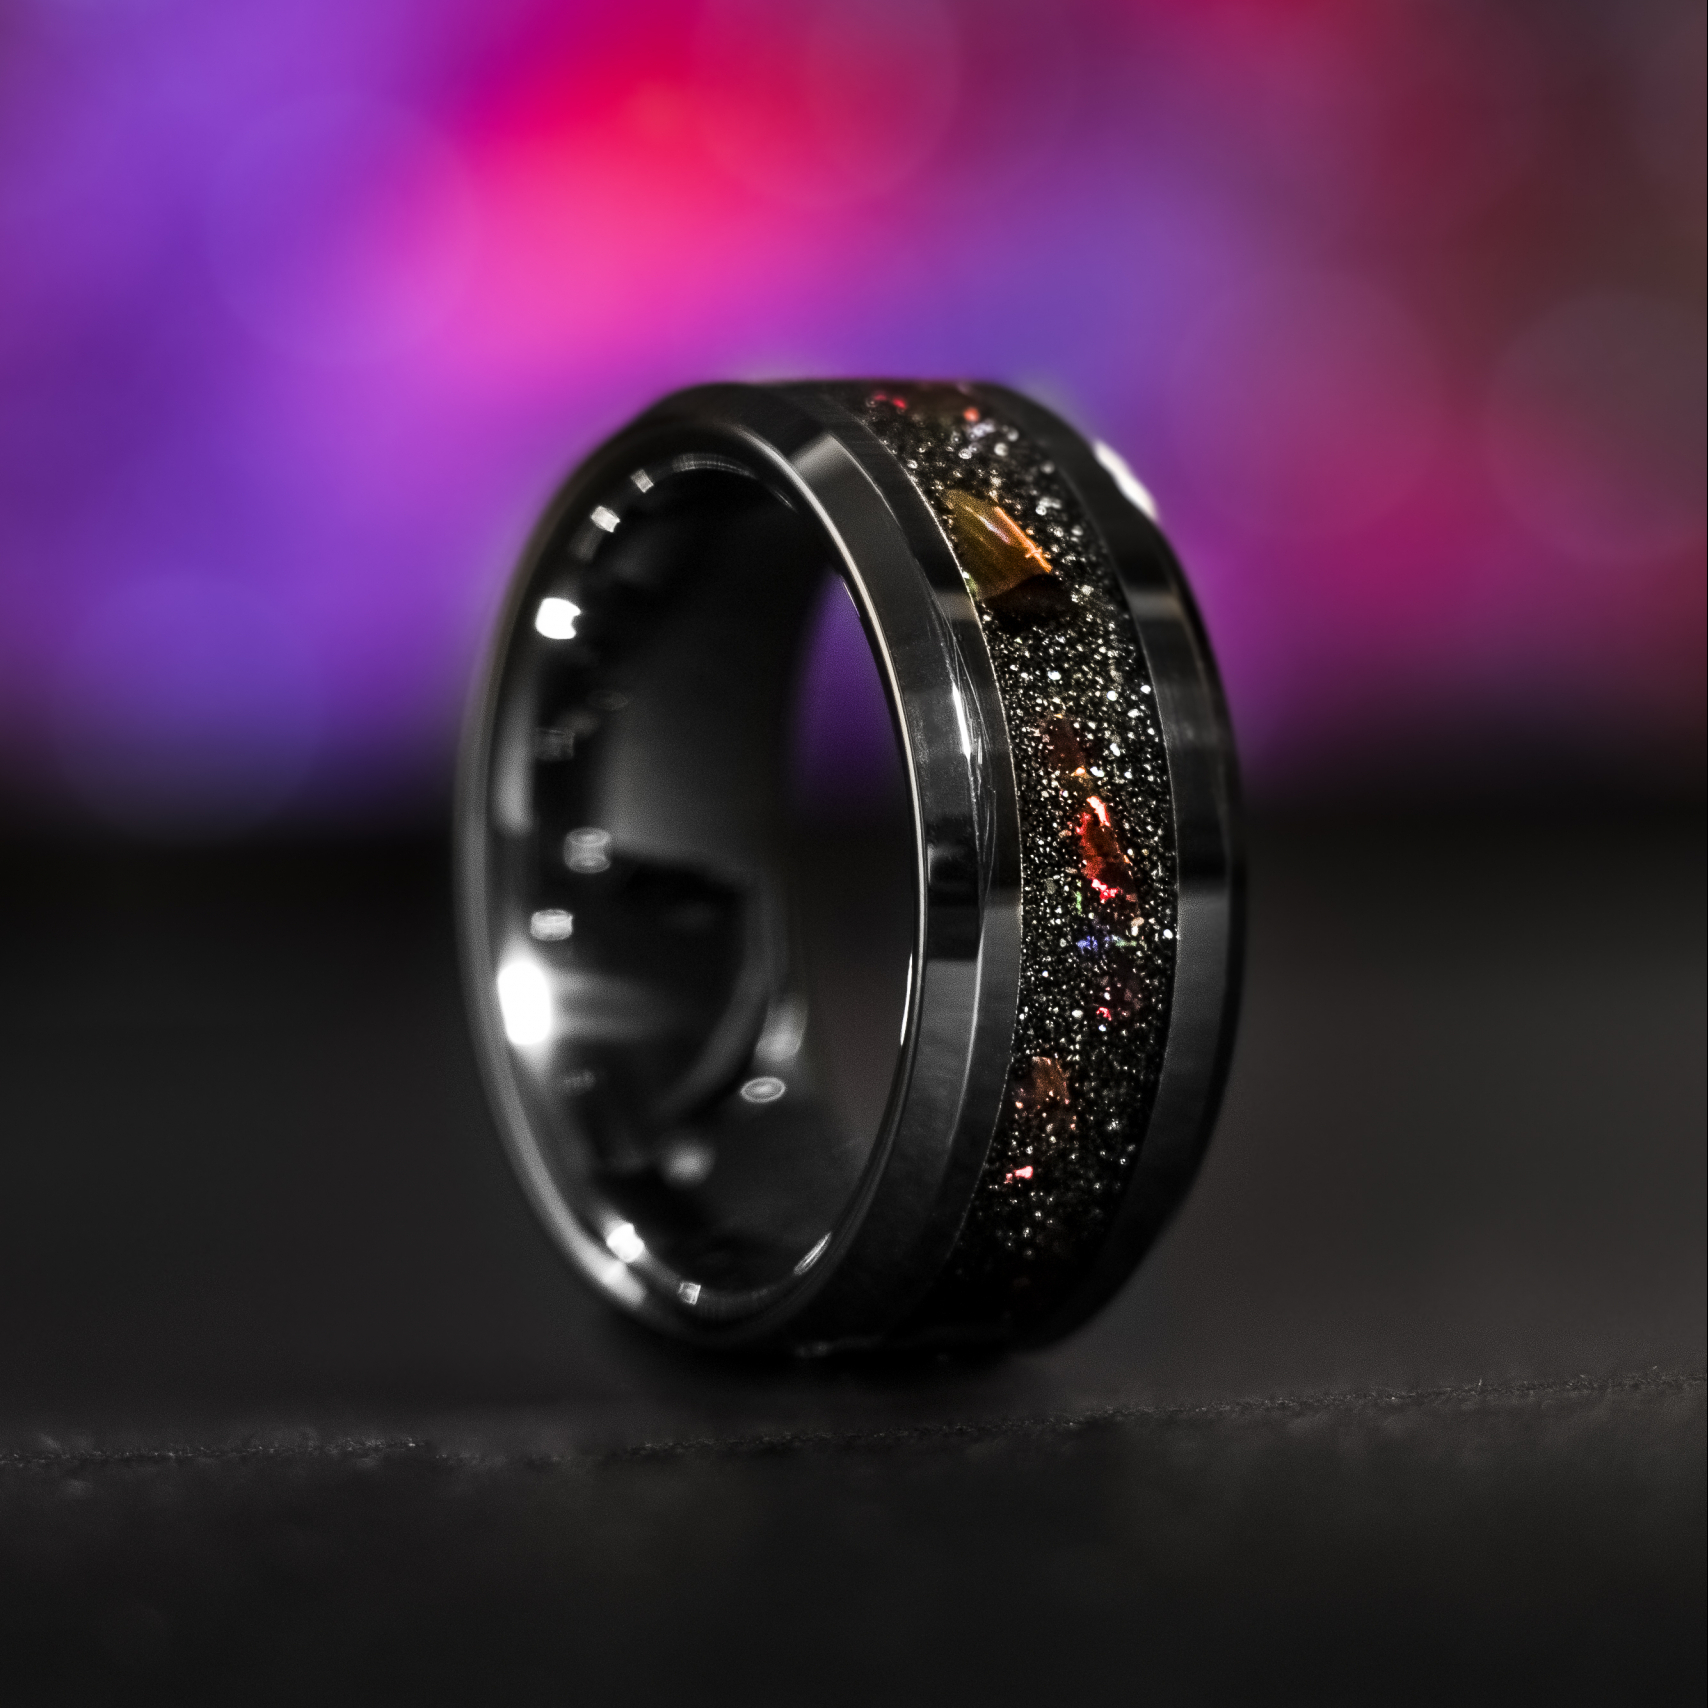 5mm Opal Stone Ring – Handmade Studio Co